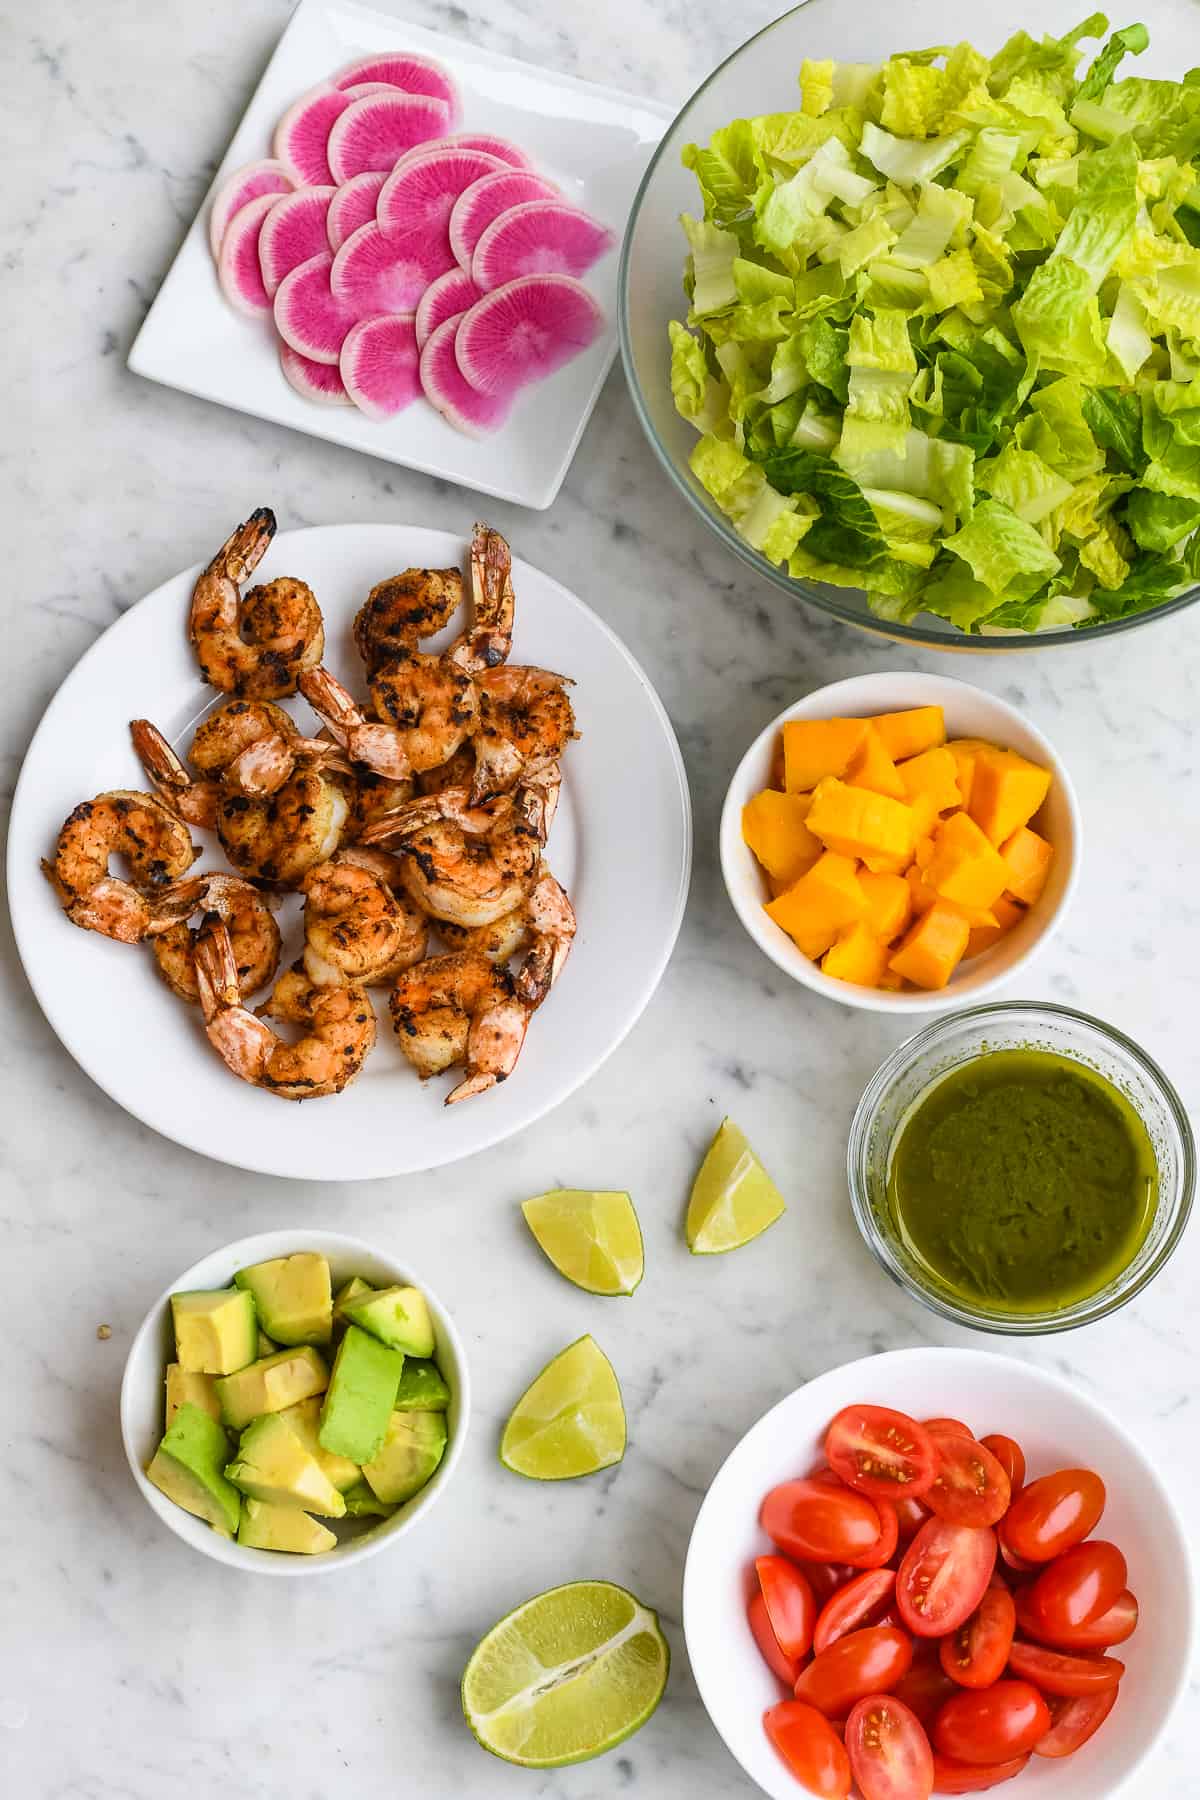 Shrimp Salad with Mango and Avocado ingredients